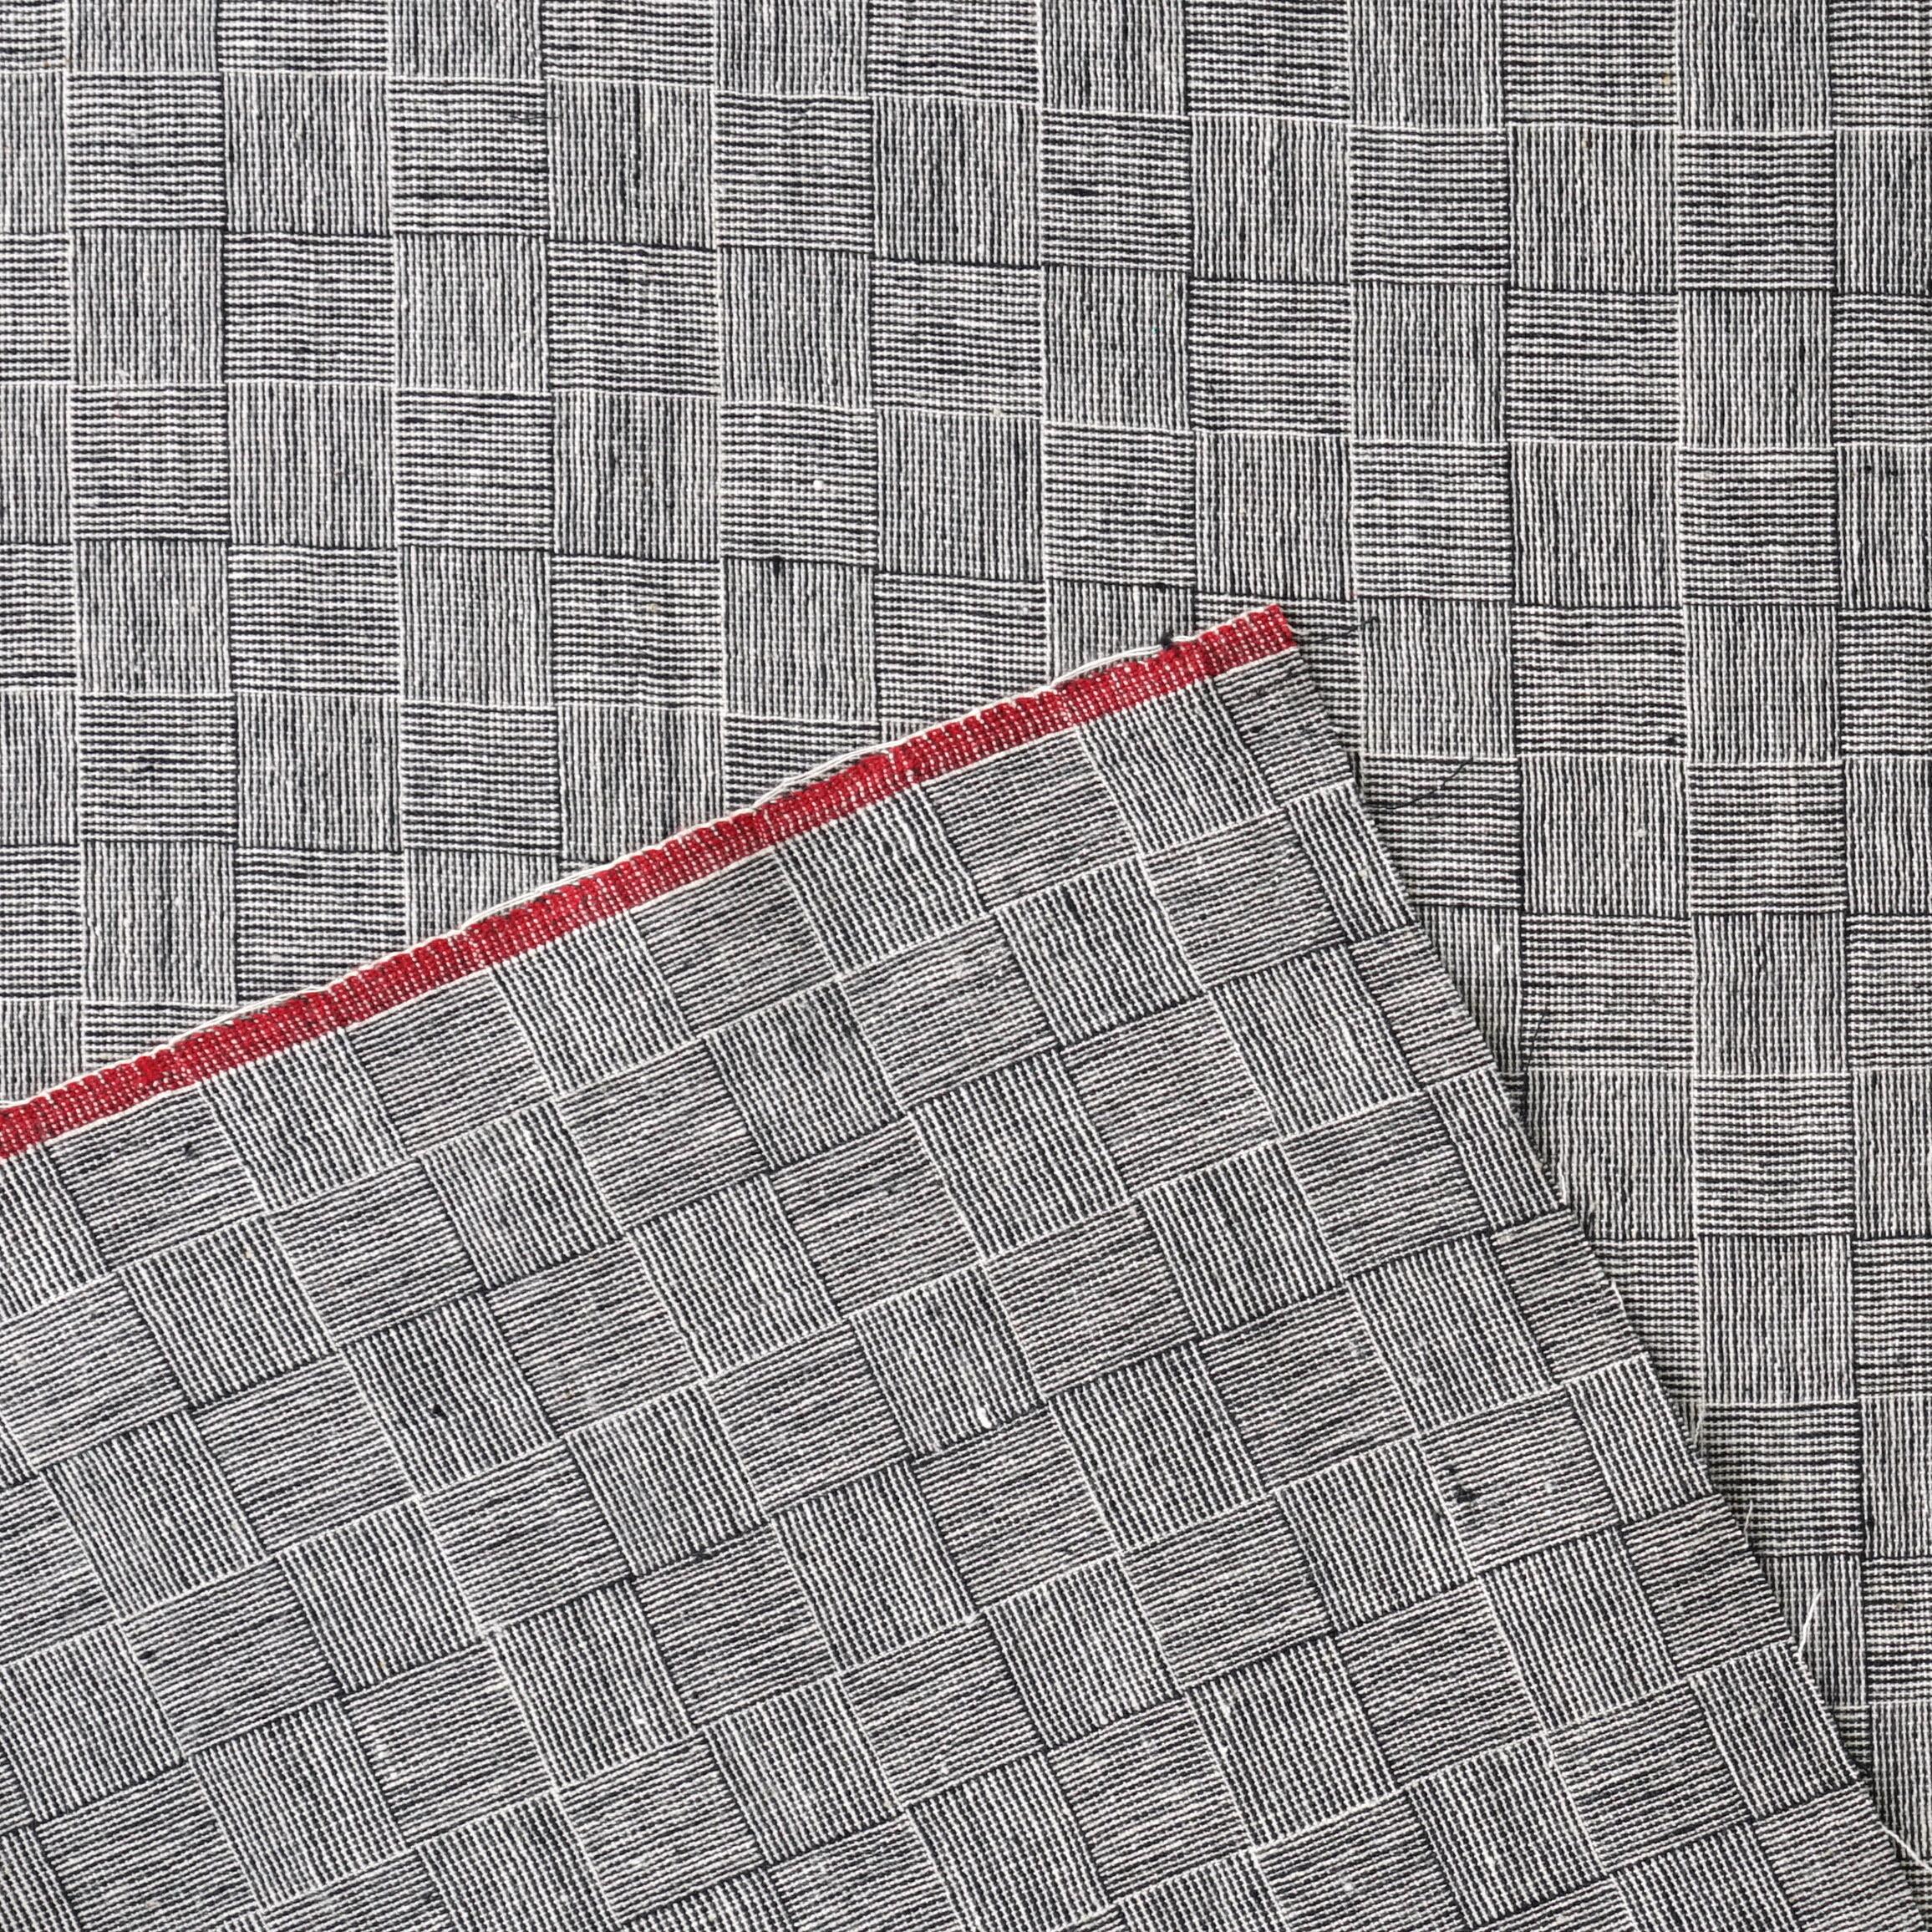 KJC12 - Indian Handloom-Woven Organic Kala Cotton Fabric - Plain 1 by 1 Weave - Checkers Design - Black Reactive Thread Dye - Selvedge